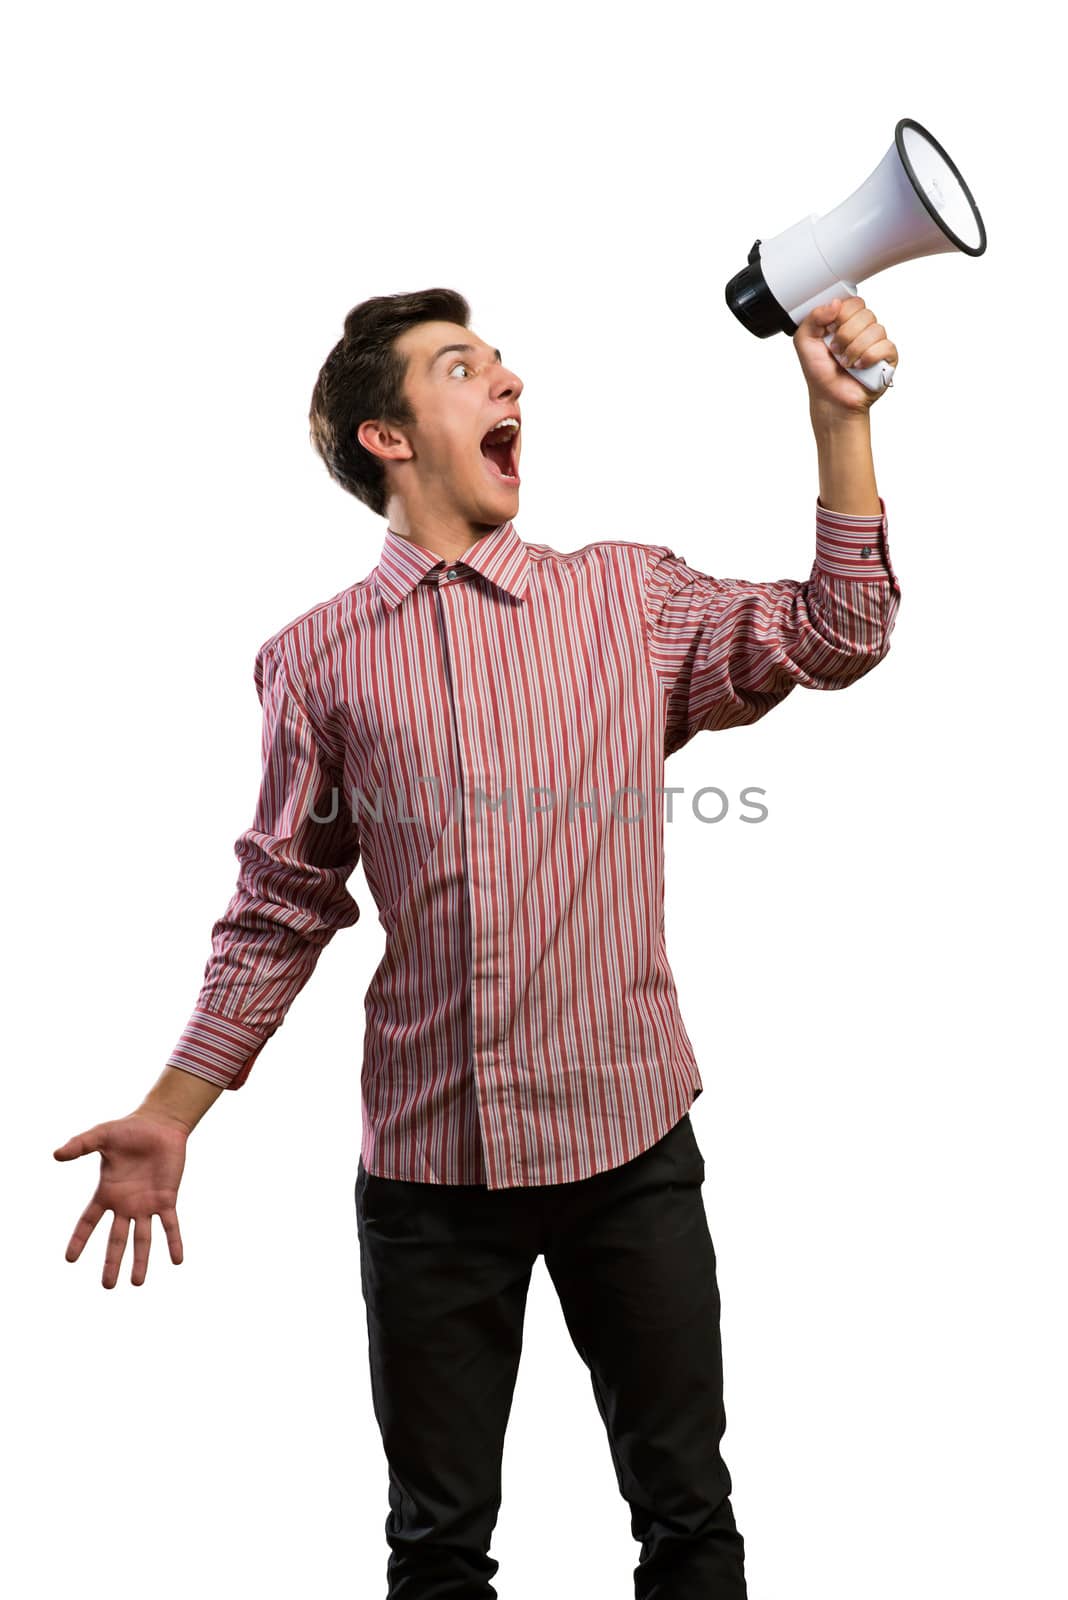 man yells into a megaphone by adam121